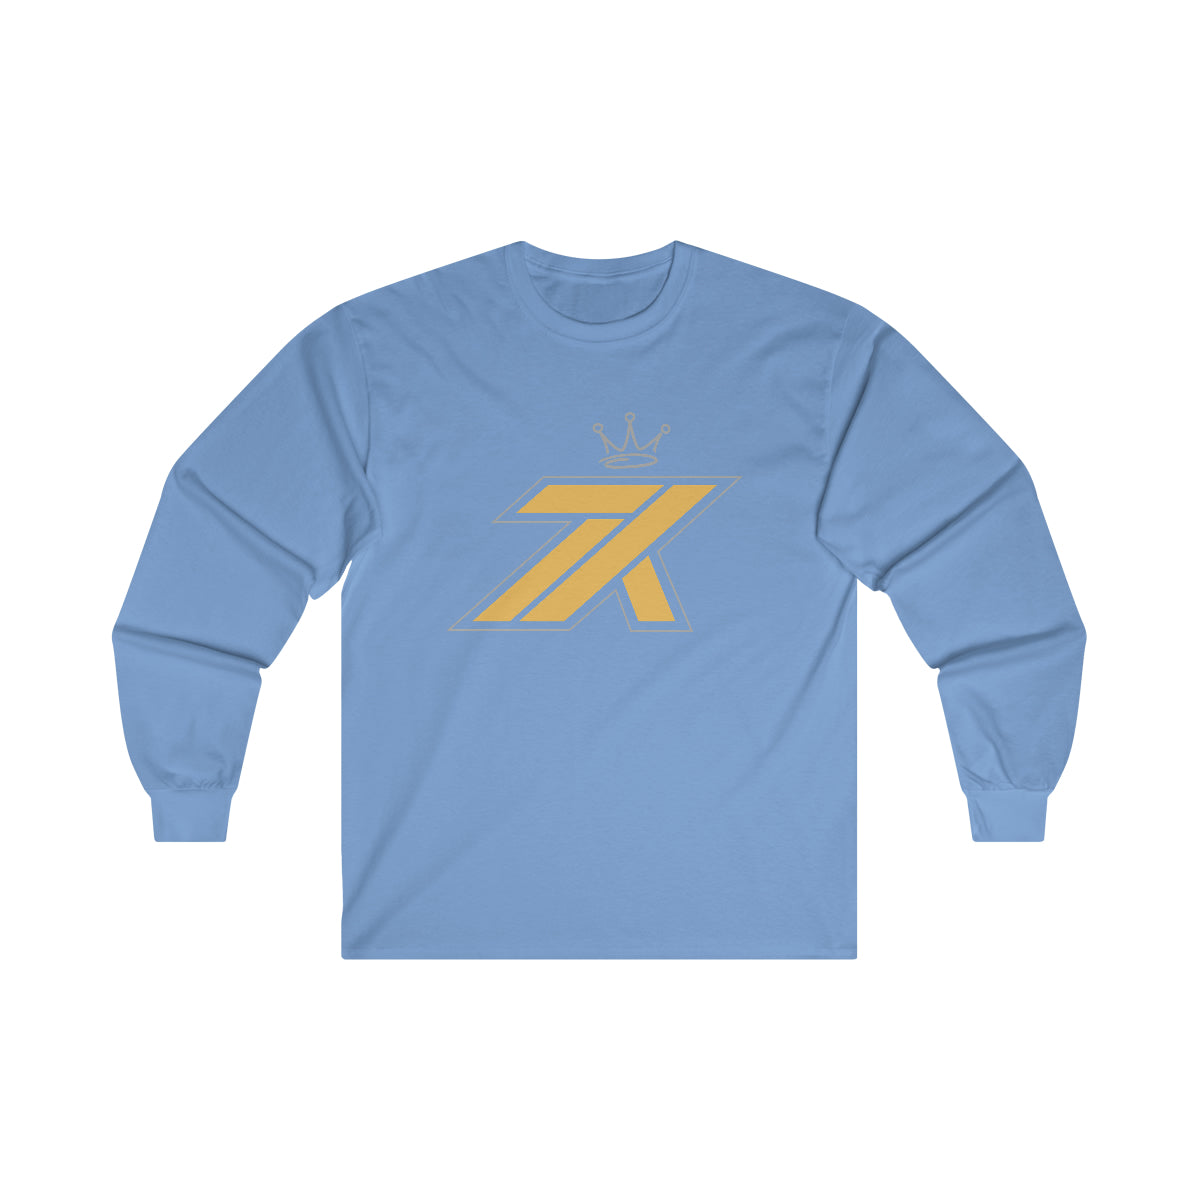 k7 Long Sleeve Shirt